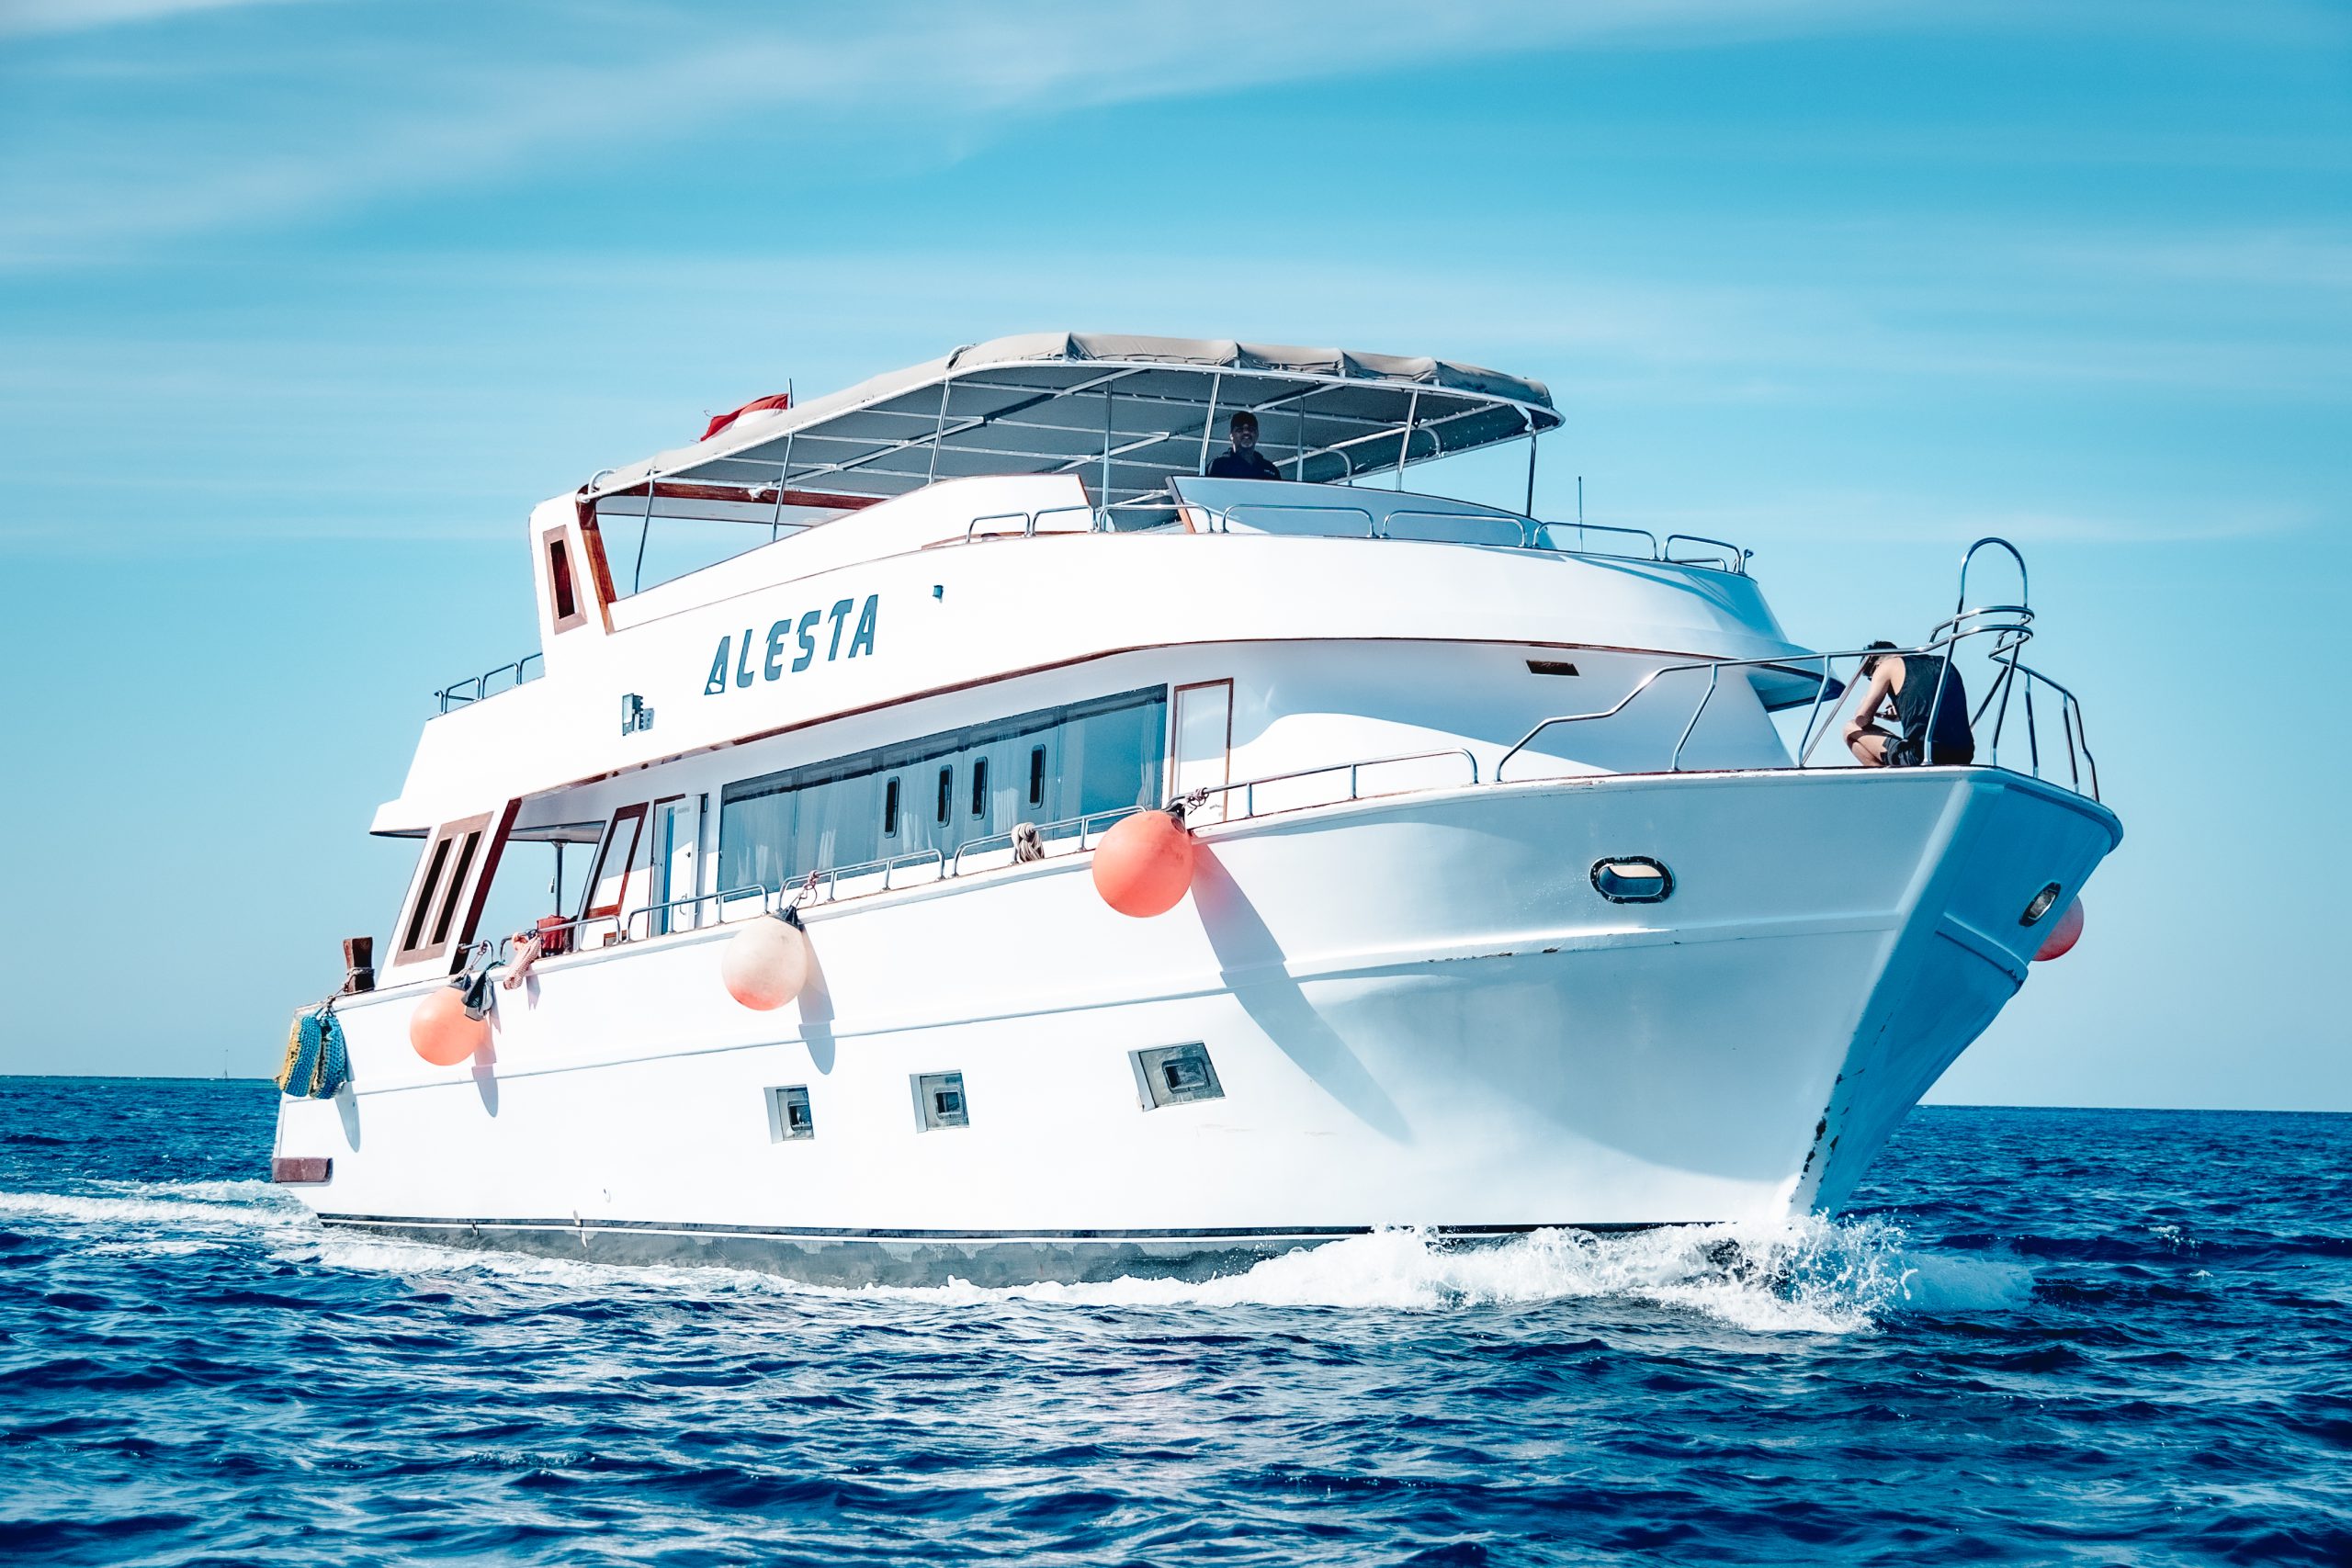 VIP Boat Dreams Tour in Hurghada